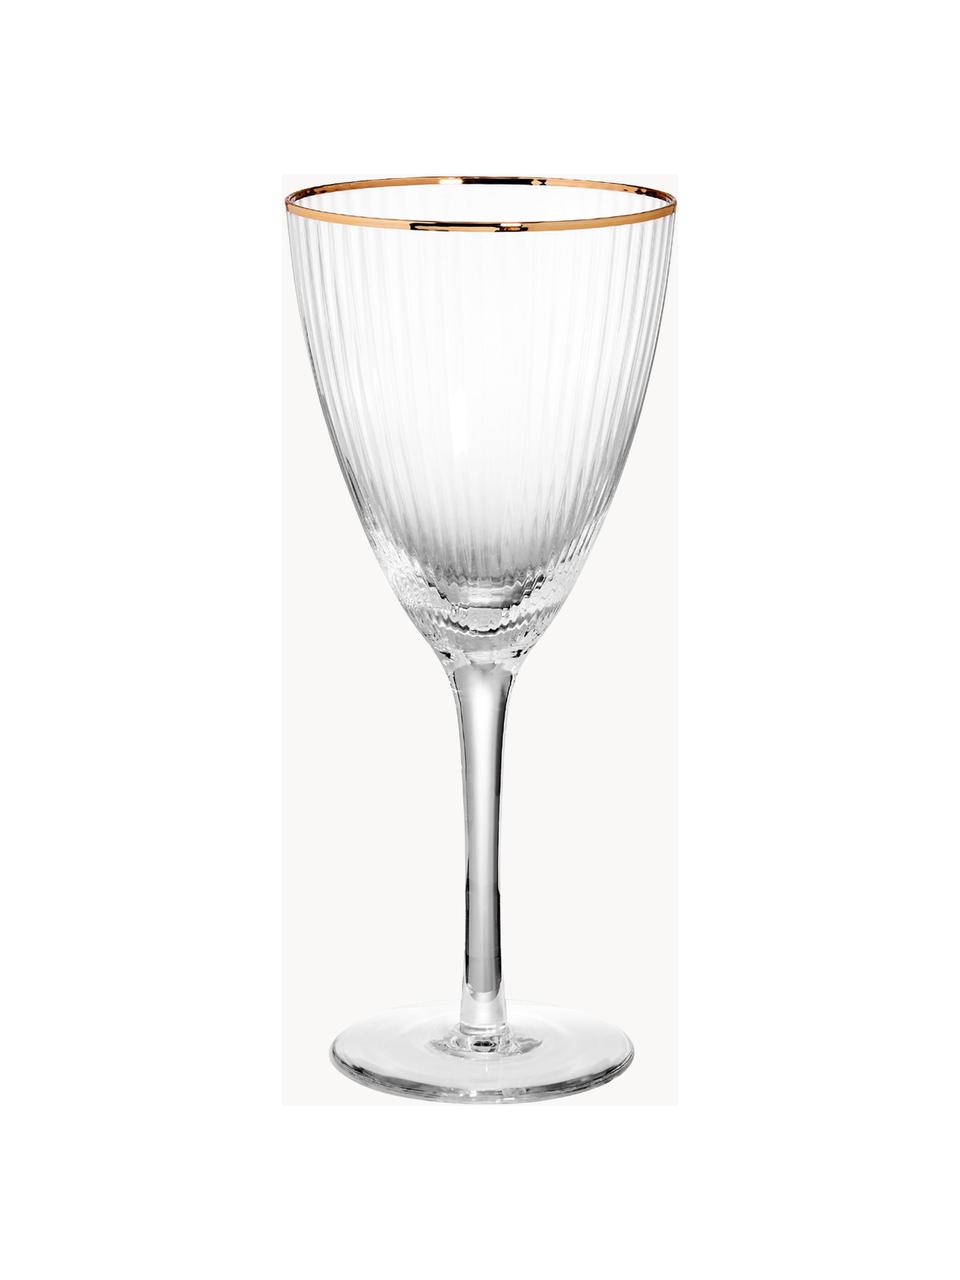 Bicchieri da vino Golden Twenties 4 pz, Vetro, Trasparente, dorato, Ø 9 x Alt. 22 cm, 280 ml